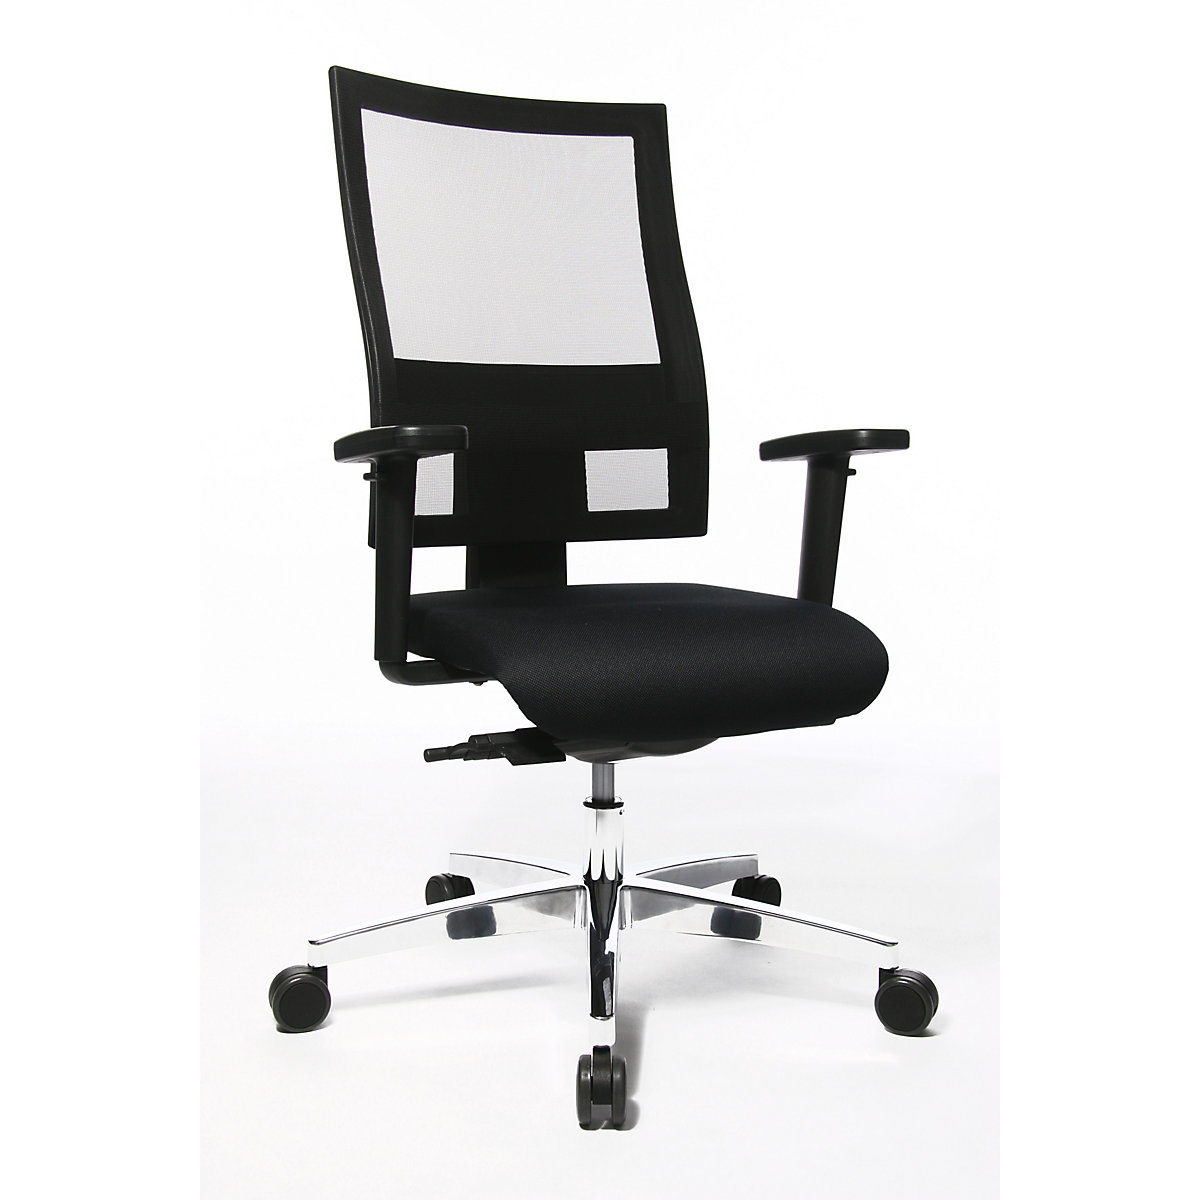 PROFI NET 11 office swivel chair - Topstar